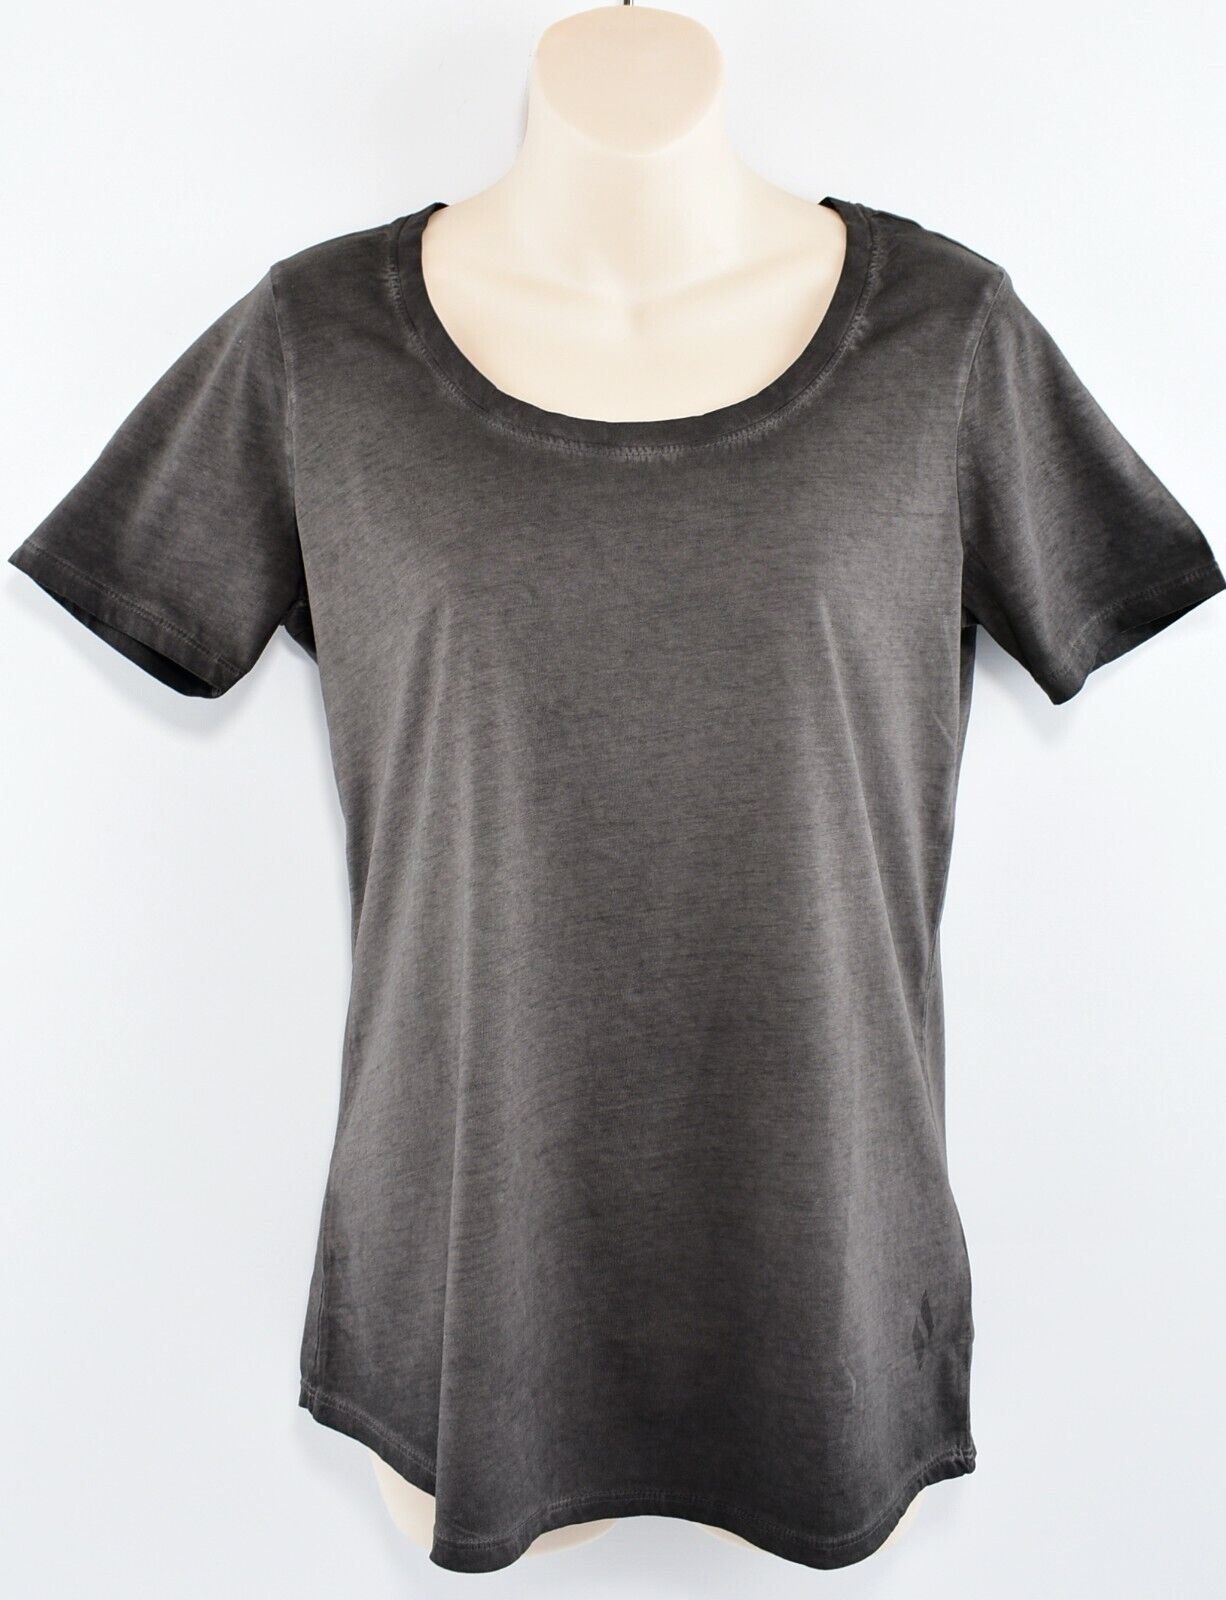 SKECHERS Women's Tunic Tee, T-shirt, Washed Black, size LARGE